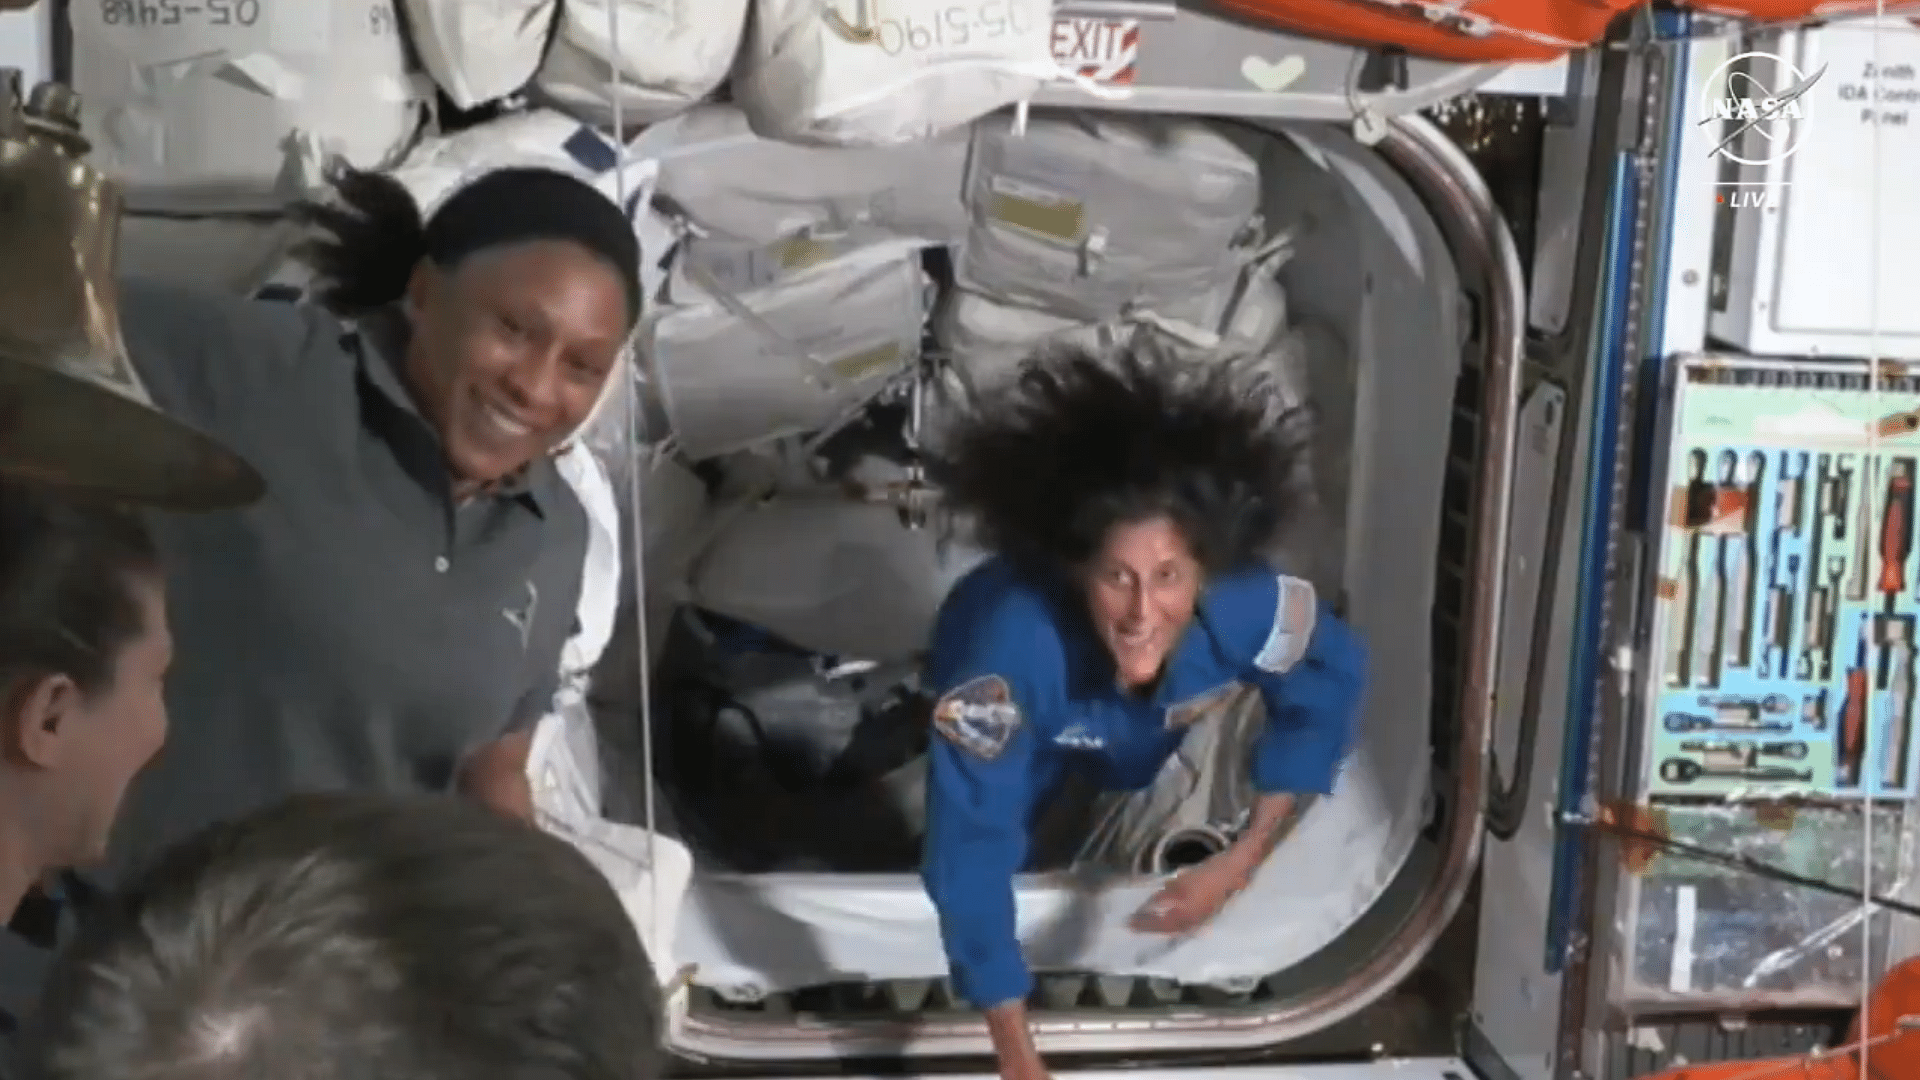 <div class="paragraphs"><p>Sunita Williams broke into an impromptu dance as she entered the International Space Station.</p></div>